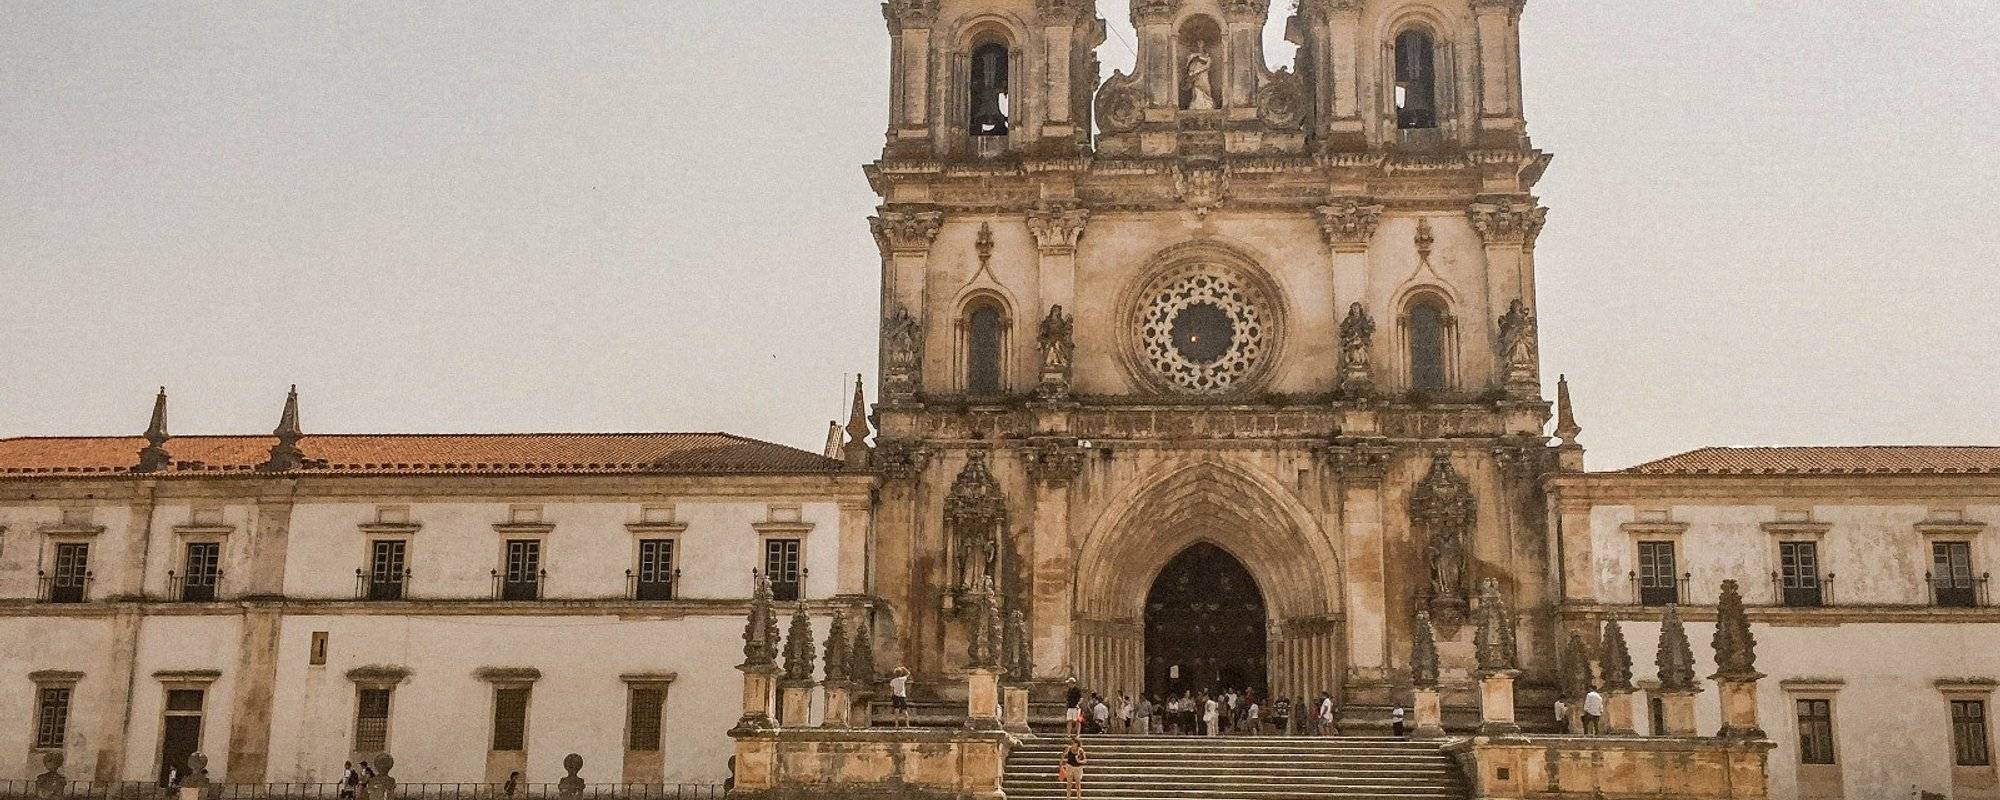 Visit Portugal - Alcobaça